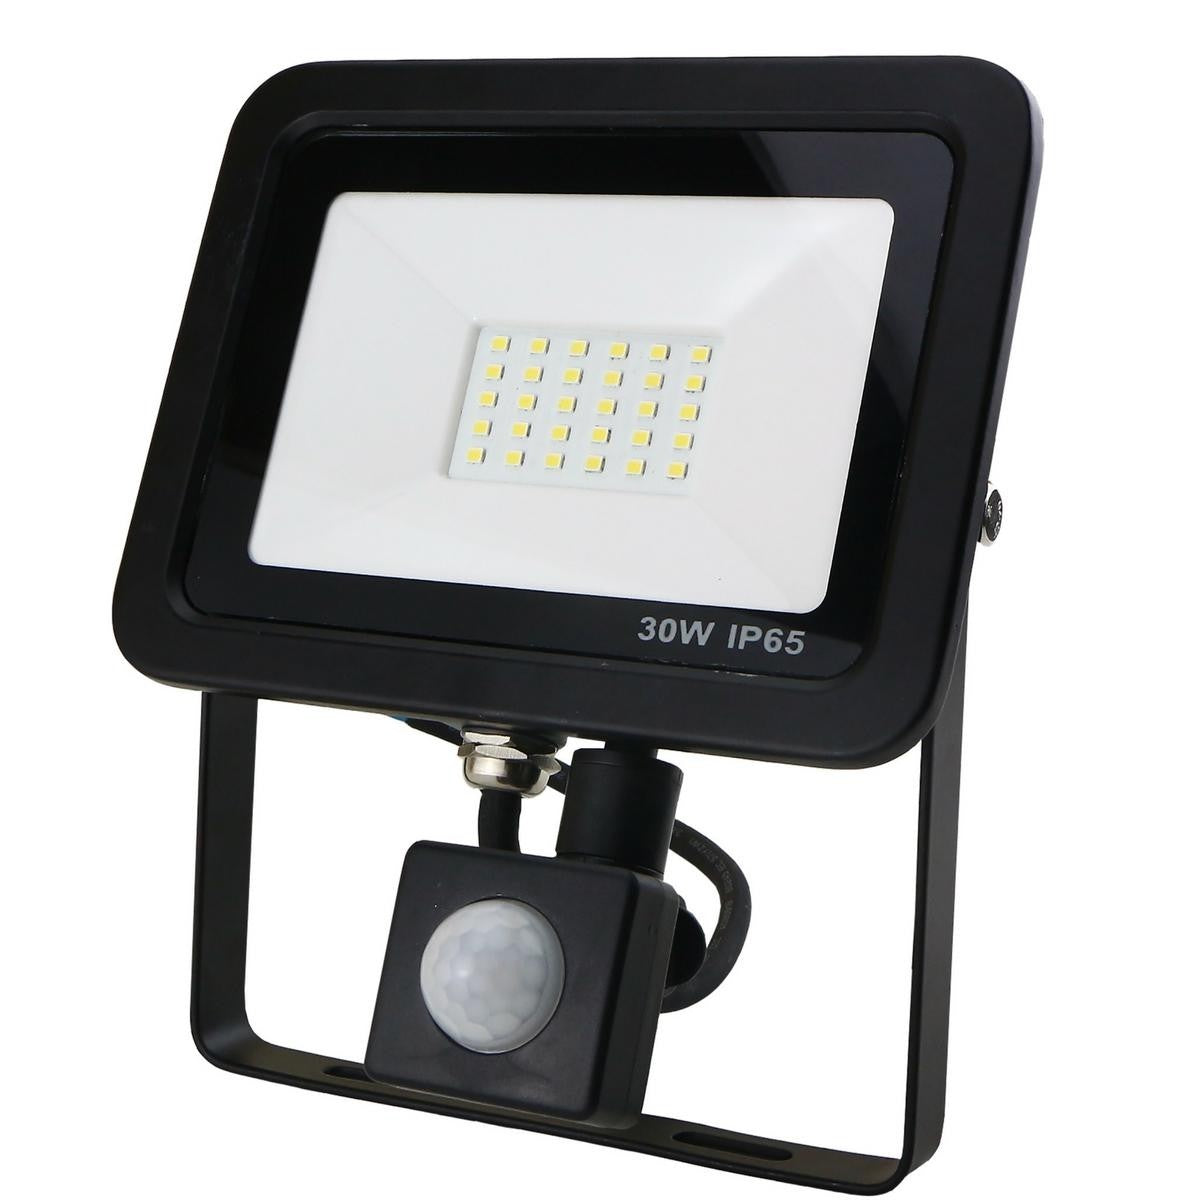 View 30w LED Flood Light With PIR Sensor information